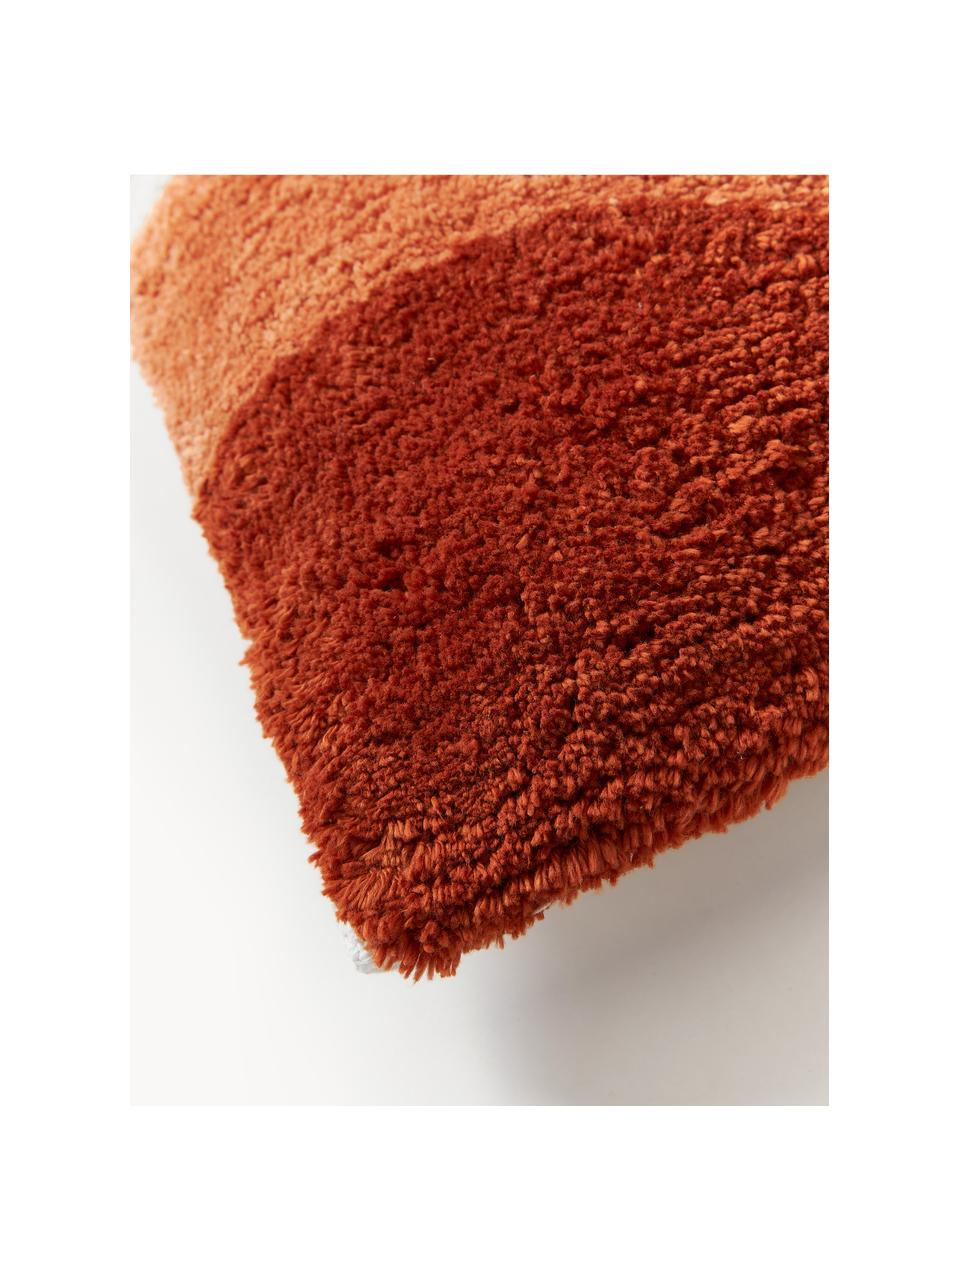 Kussenhoes Malu met decoratie, 100% katoen, Rood, oranje, crèmewit, B 45 x L 45 cm